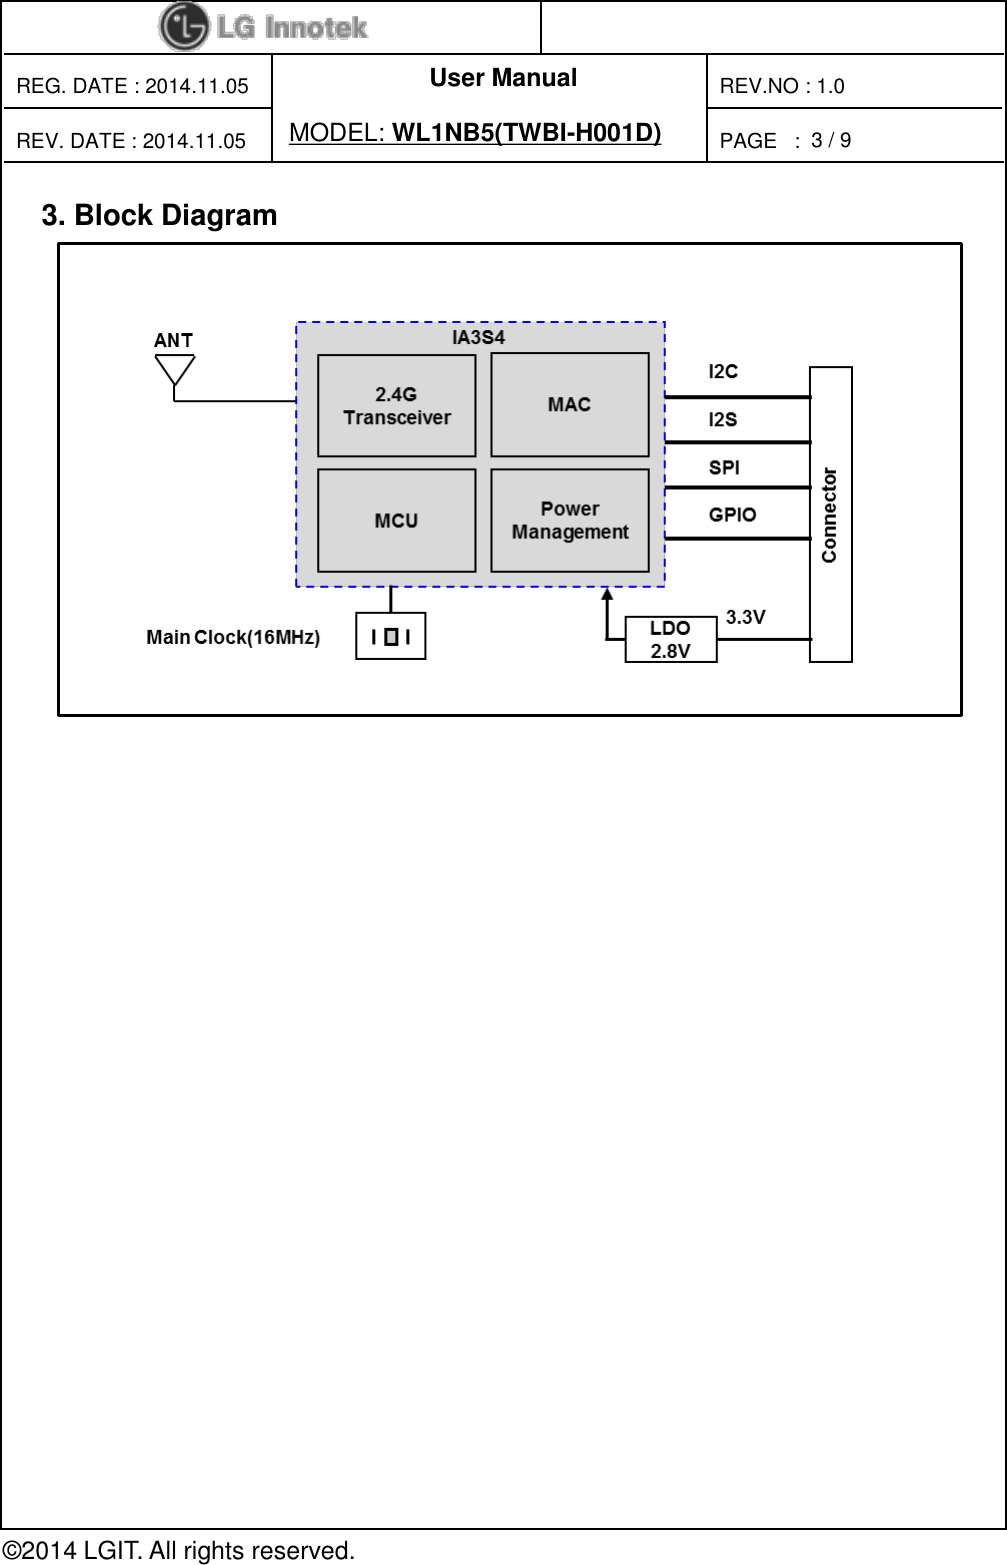 User Manual PAGE   : REG. DATE : 2014.11.05 MODEL: WL1NB5(TWBI-H001D) REV. DATE : 2014.11.05 REV.NO : 1.0 © 2014 LGIT. All rights reserved. 3 / 9 3. Block Diagram 